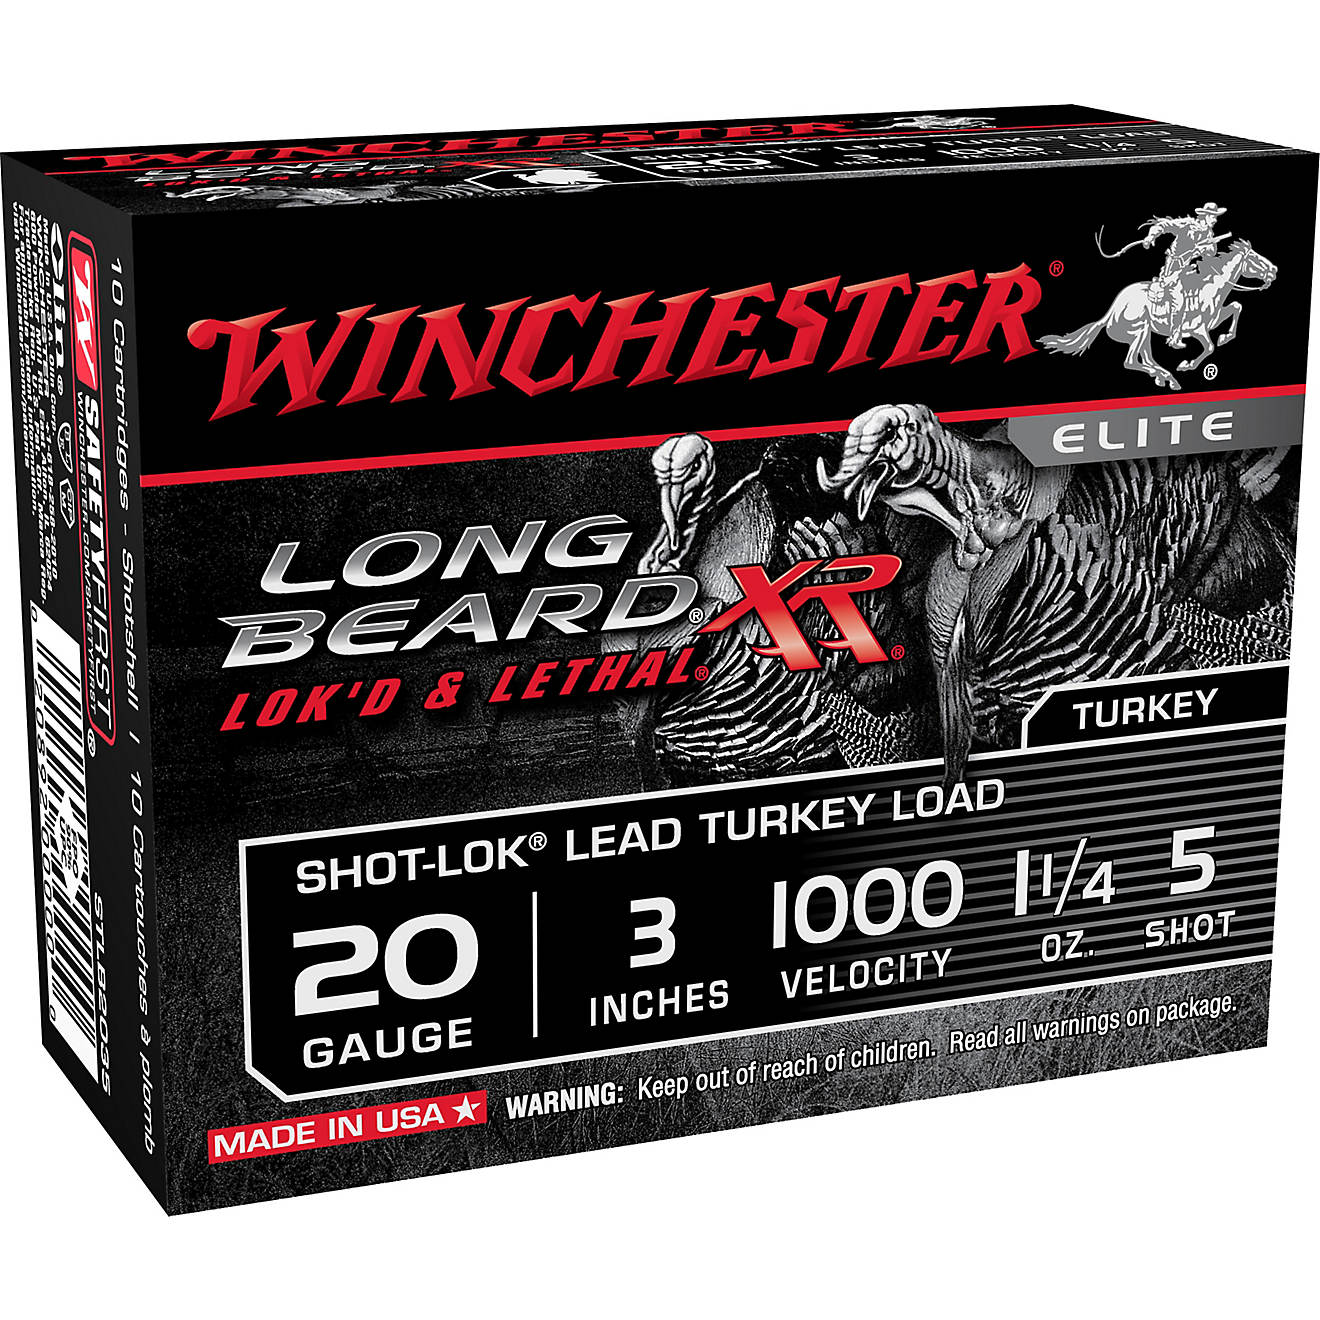 500rds of Winchester Long Beard Turkey 20 Gauge Shotshells